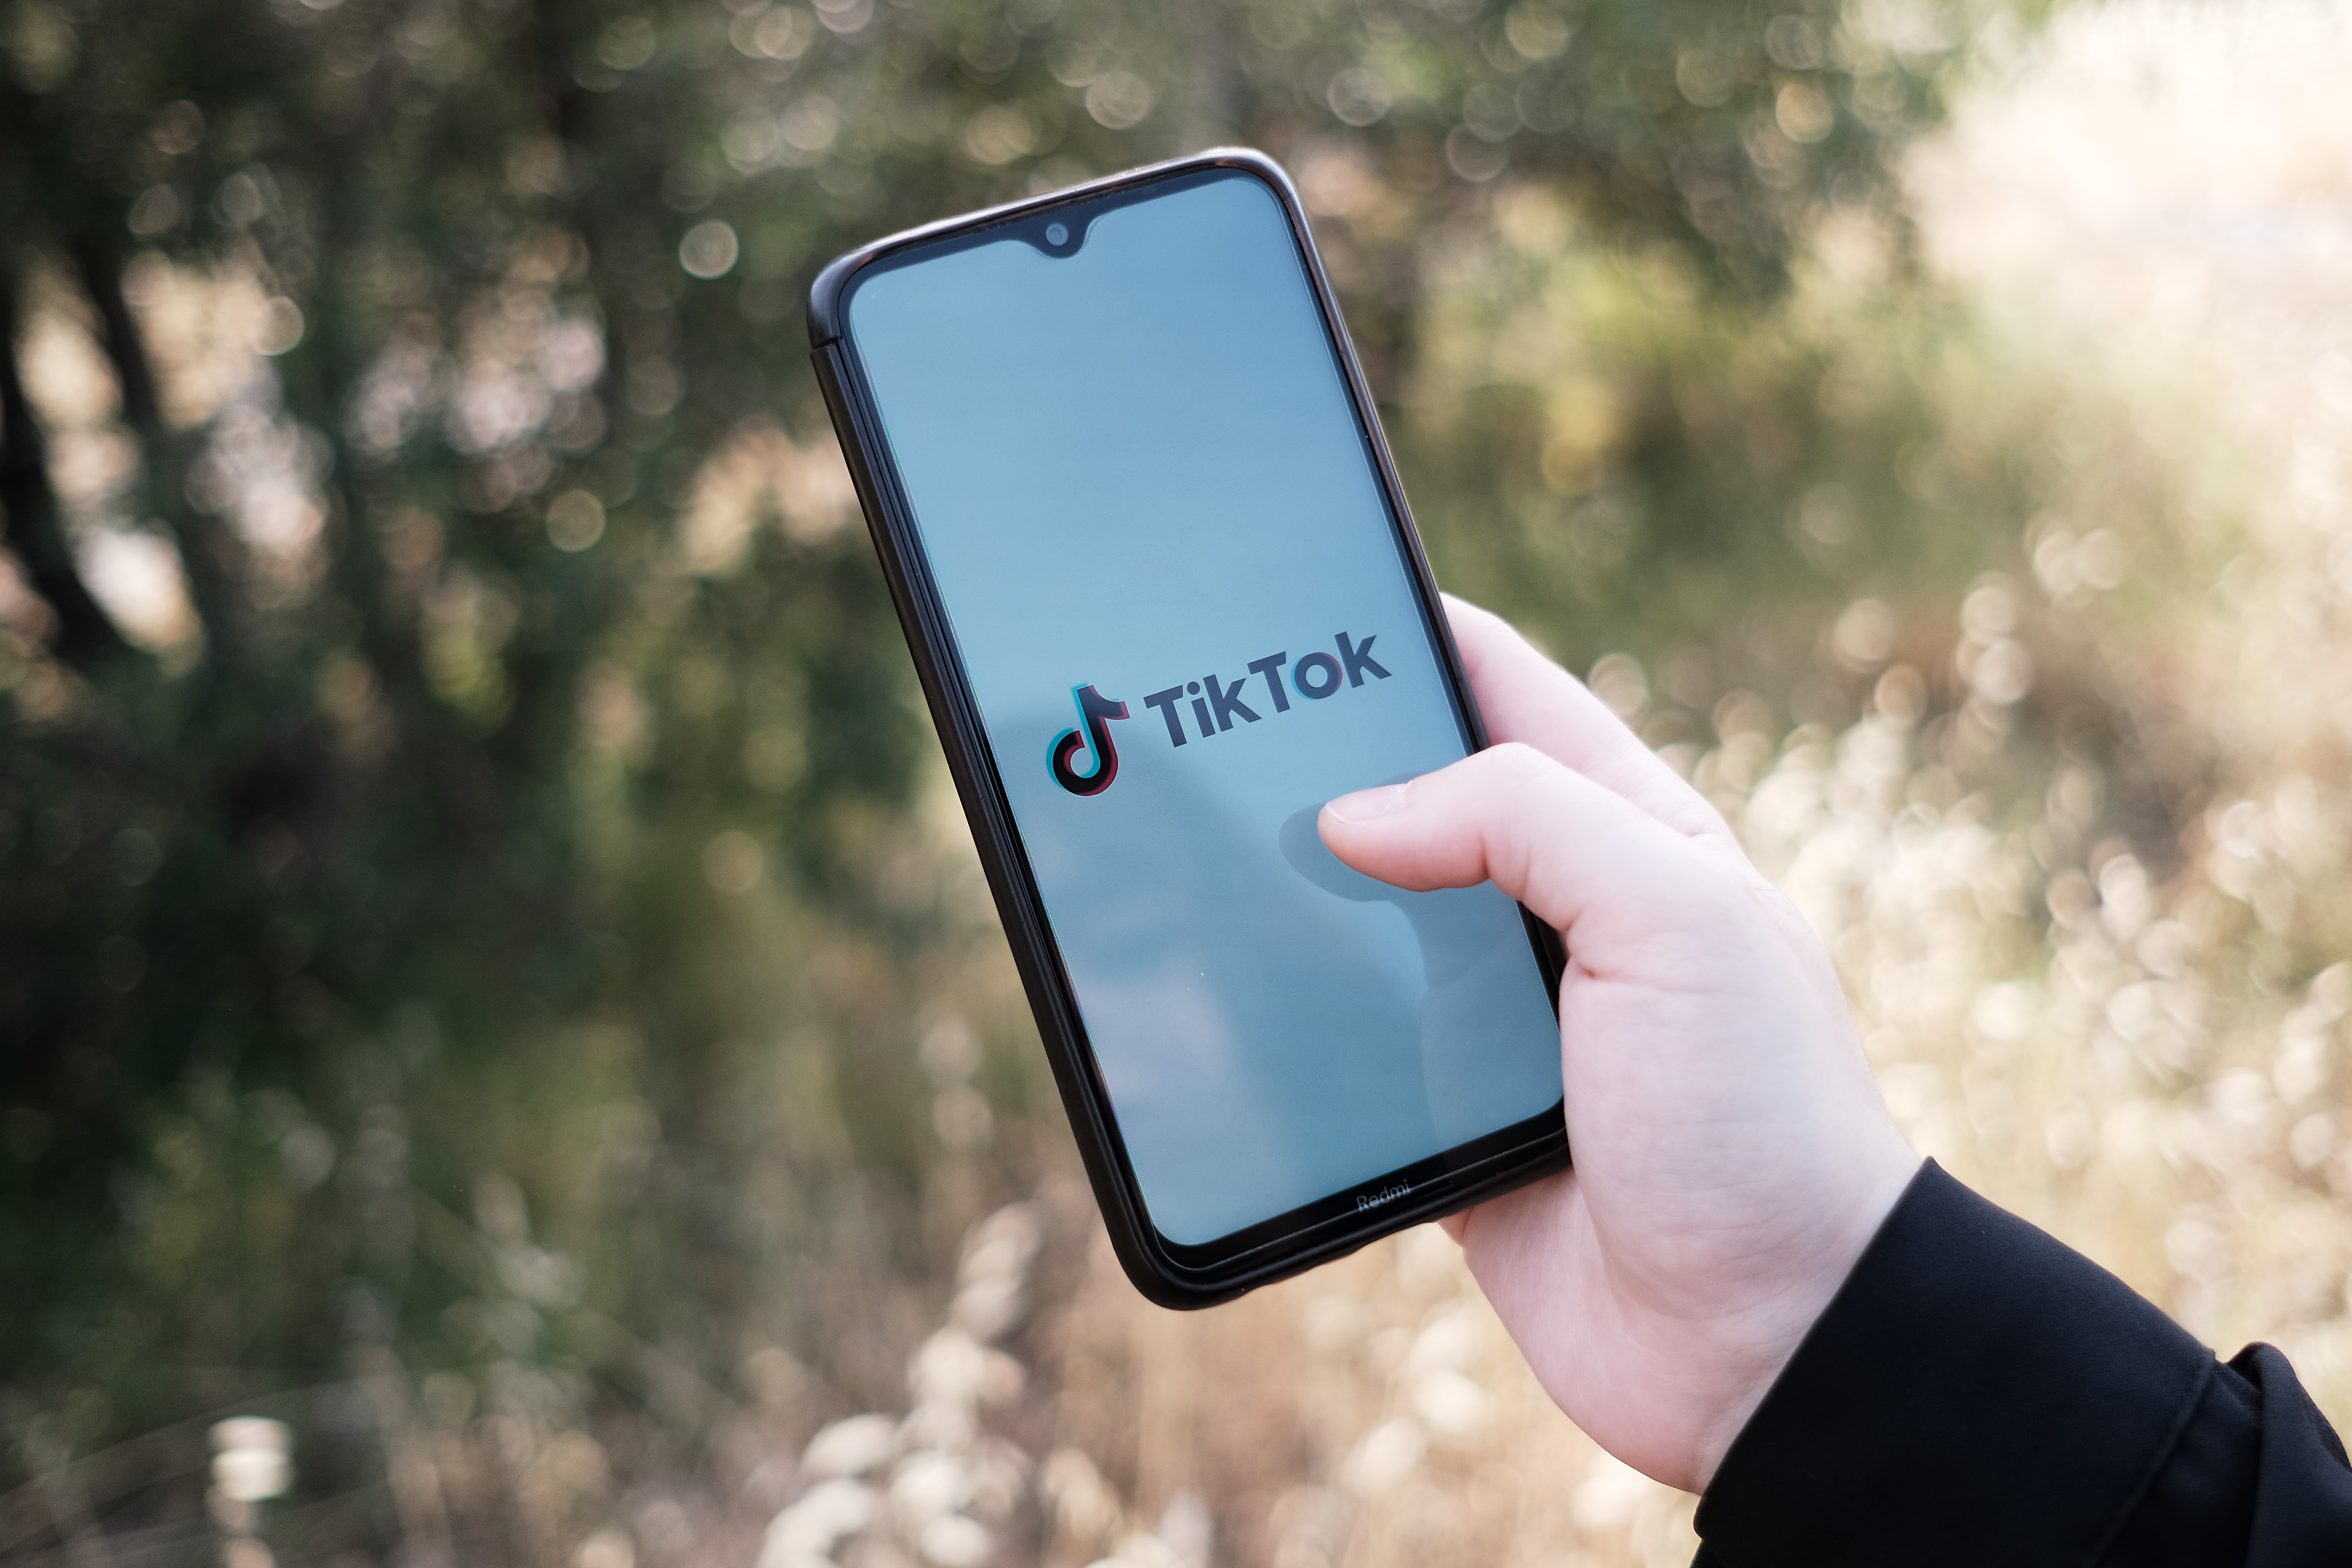 A TikTok logo on a phone screen